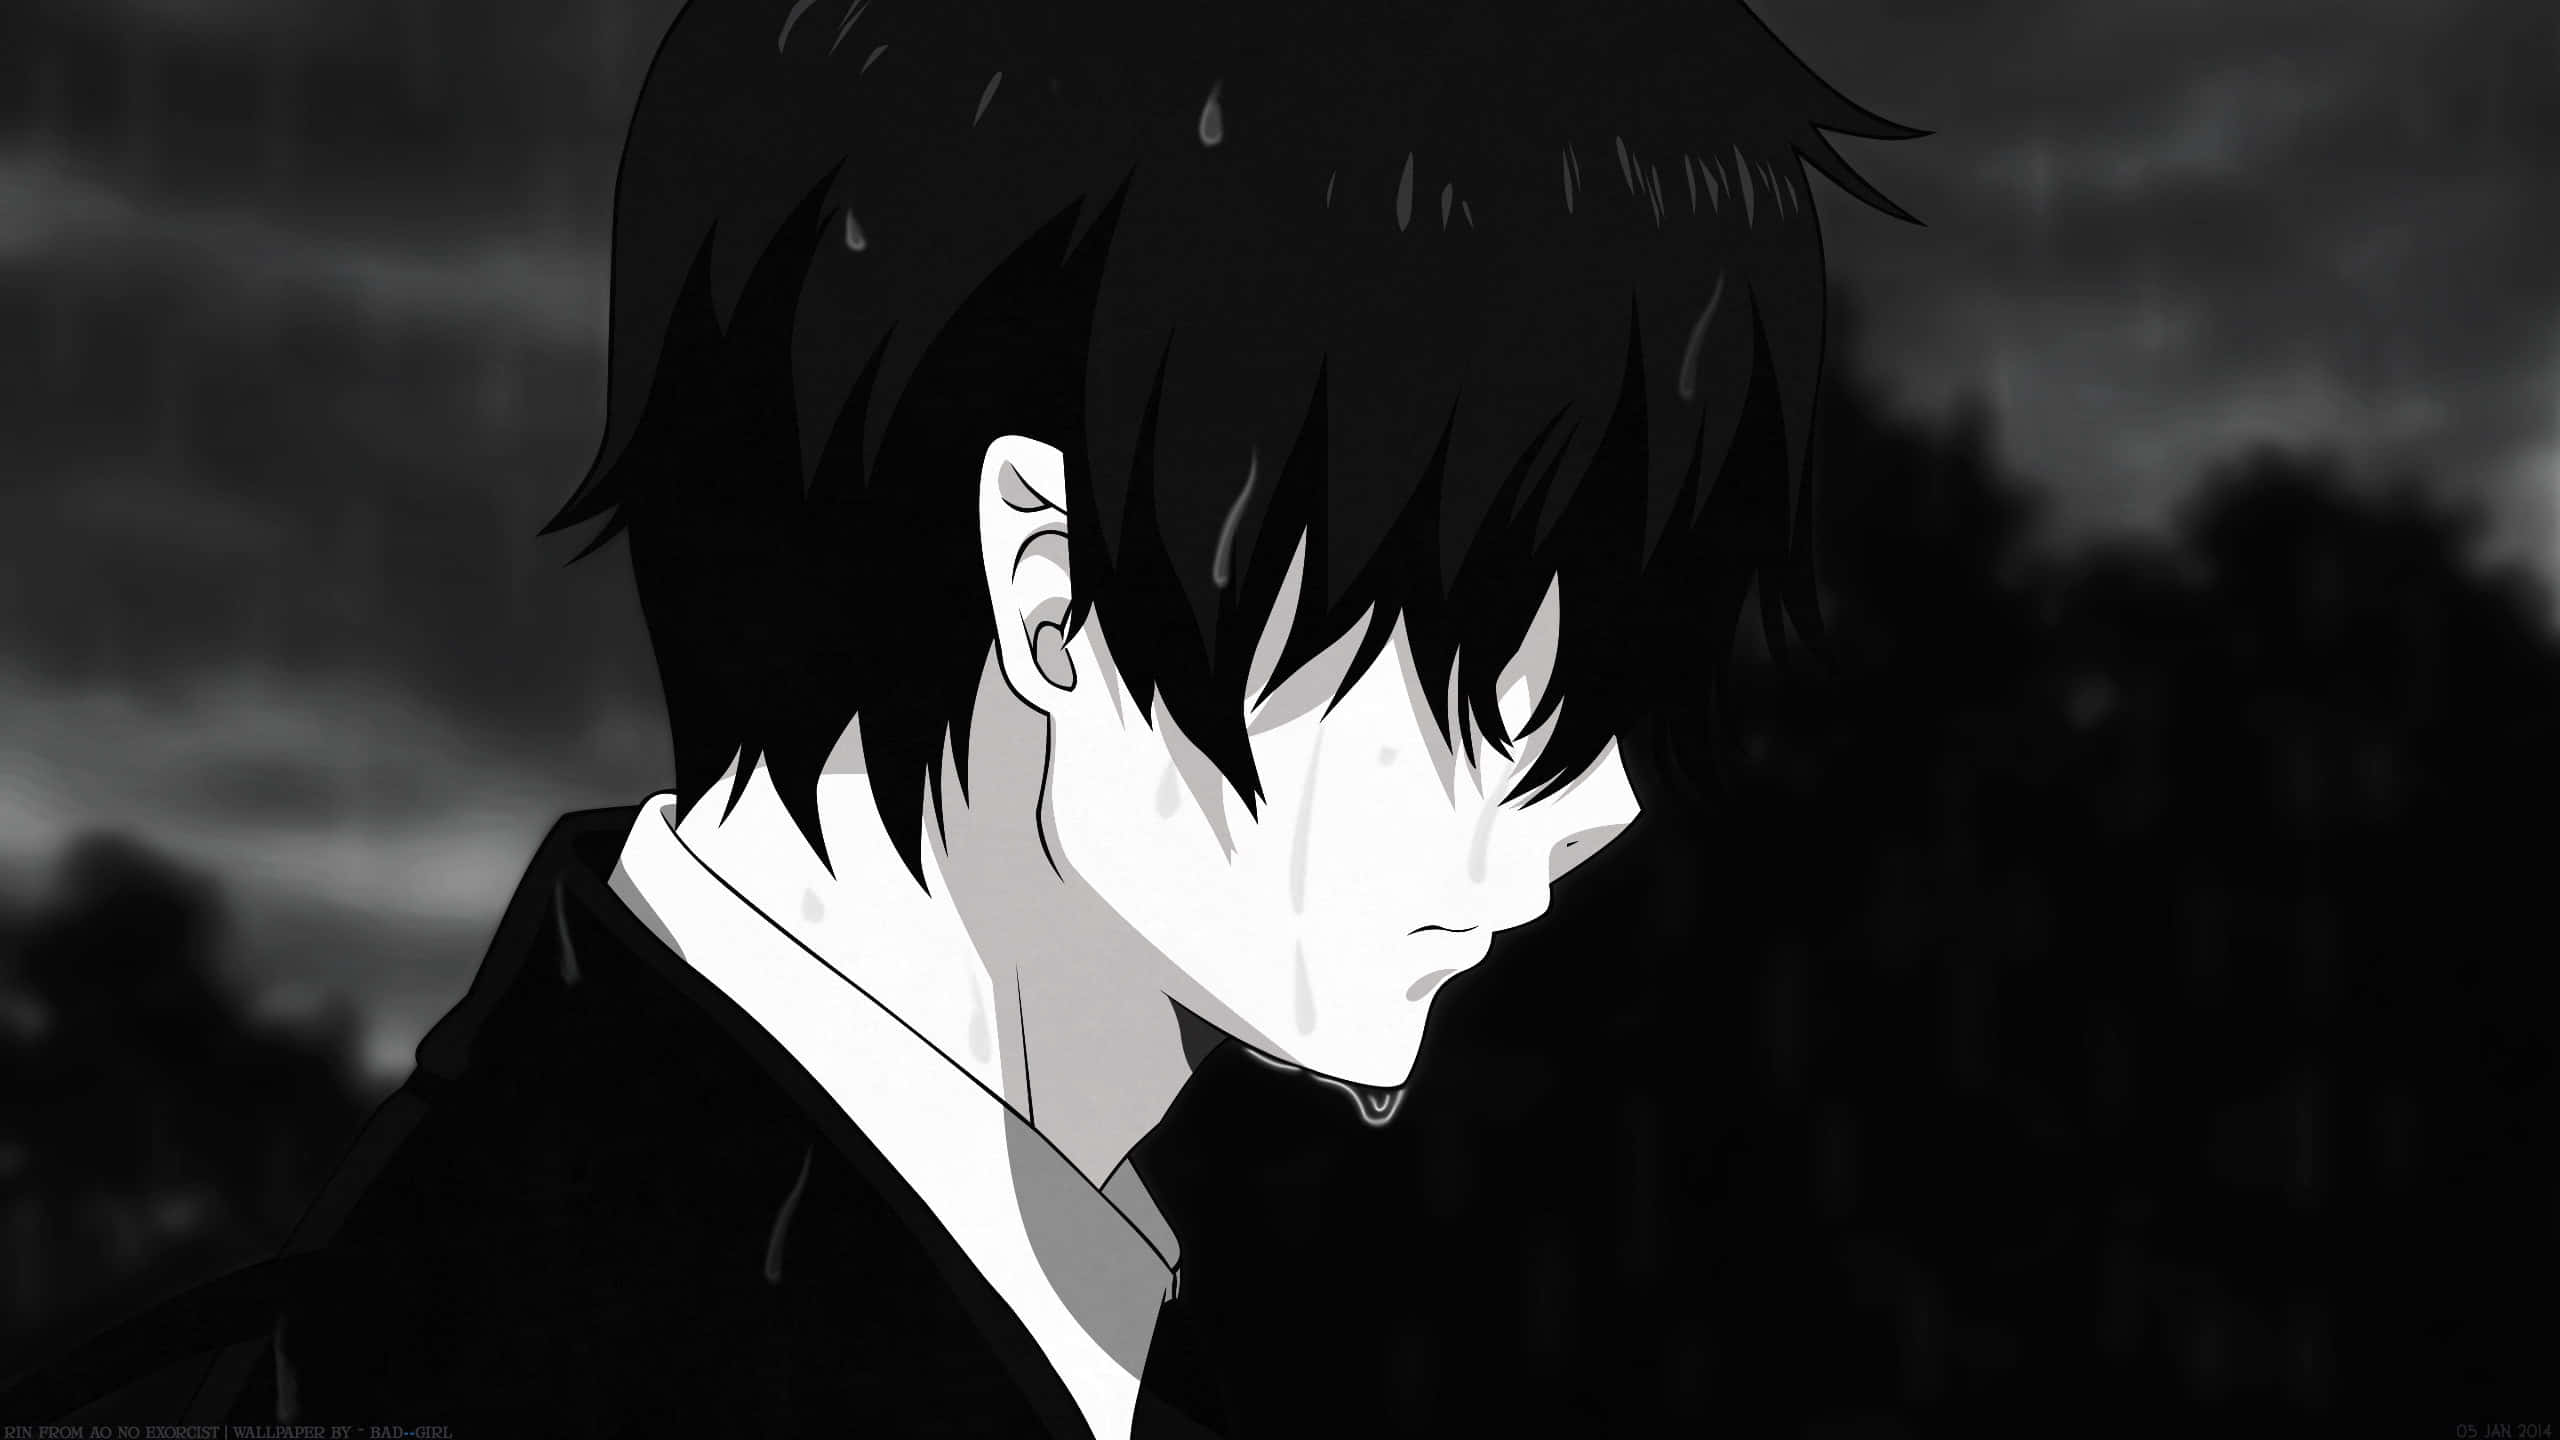 Sad Anime Boy Pfp